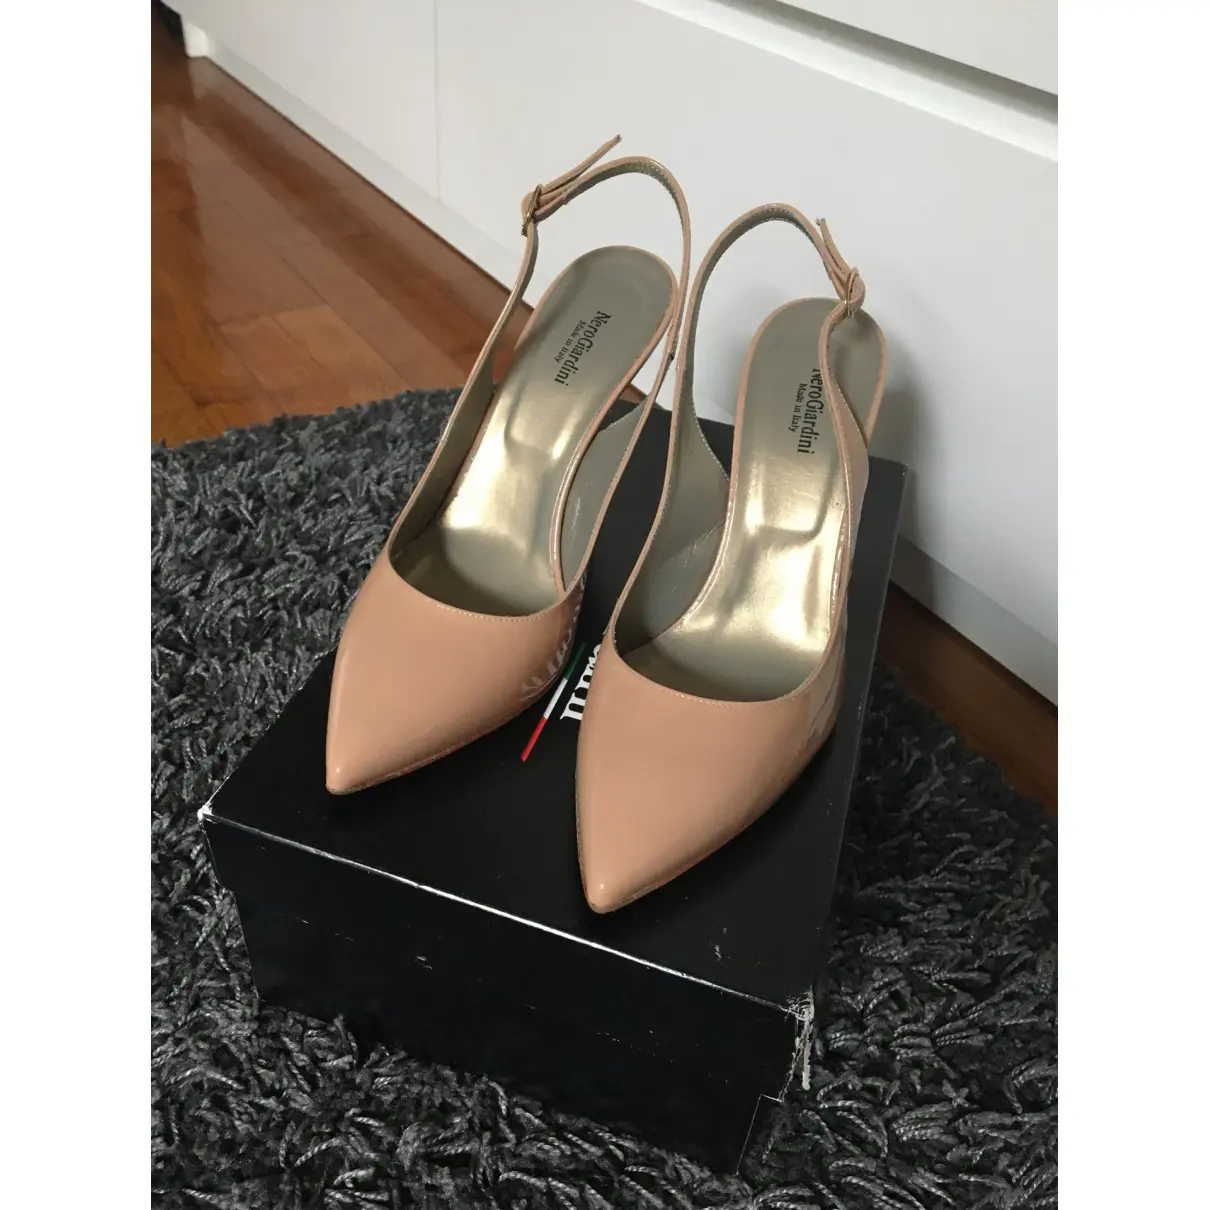 Buy NERO GIARDINI Leather heels online